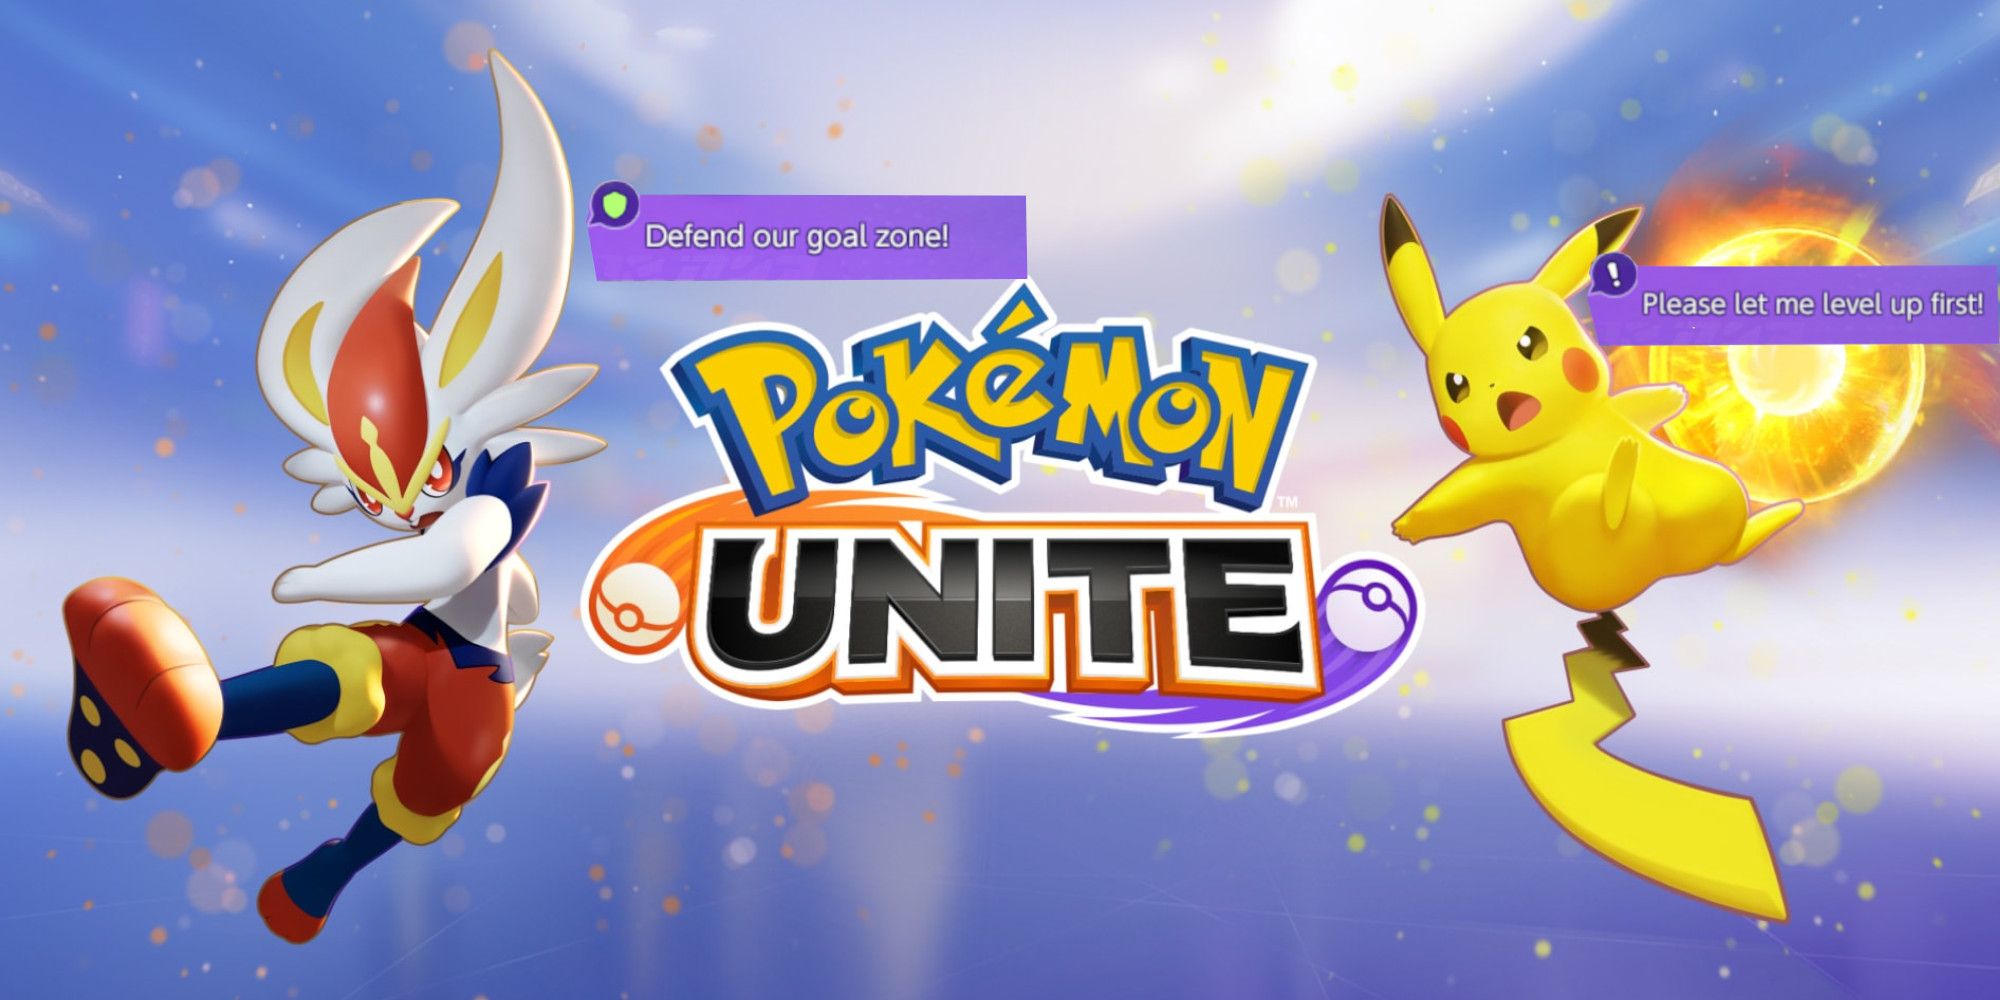 Communication Got The Biggest Buff In The New Pokemon Unite Update